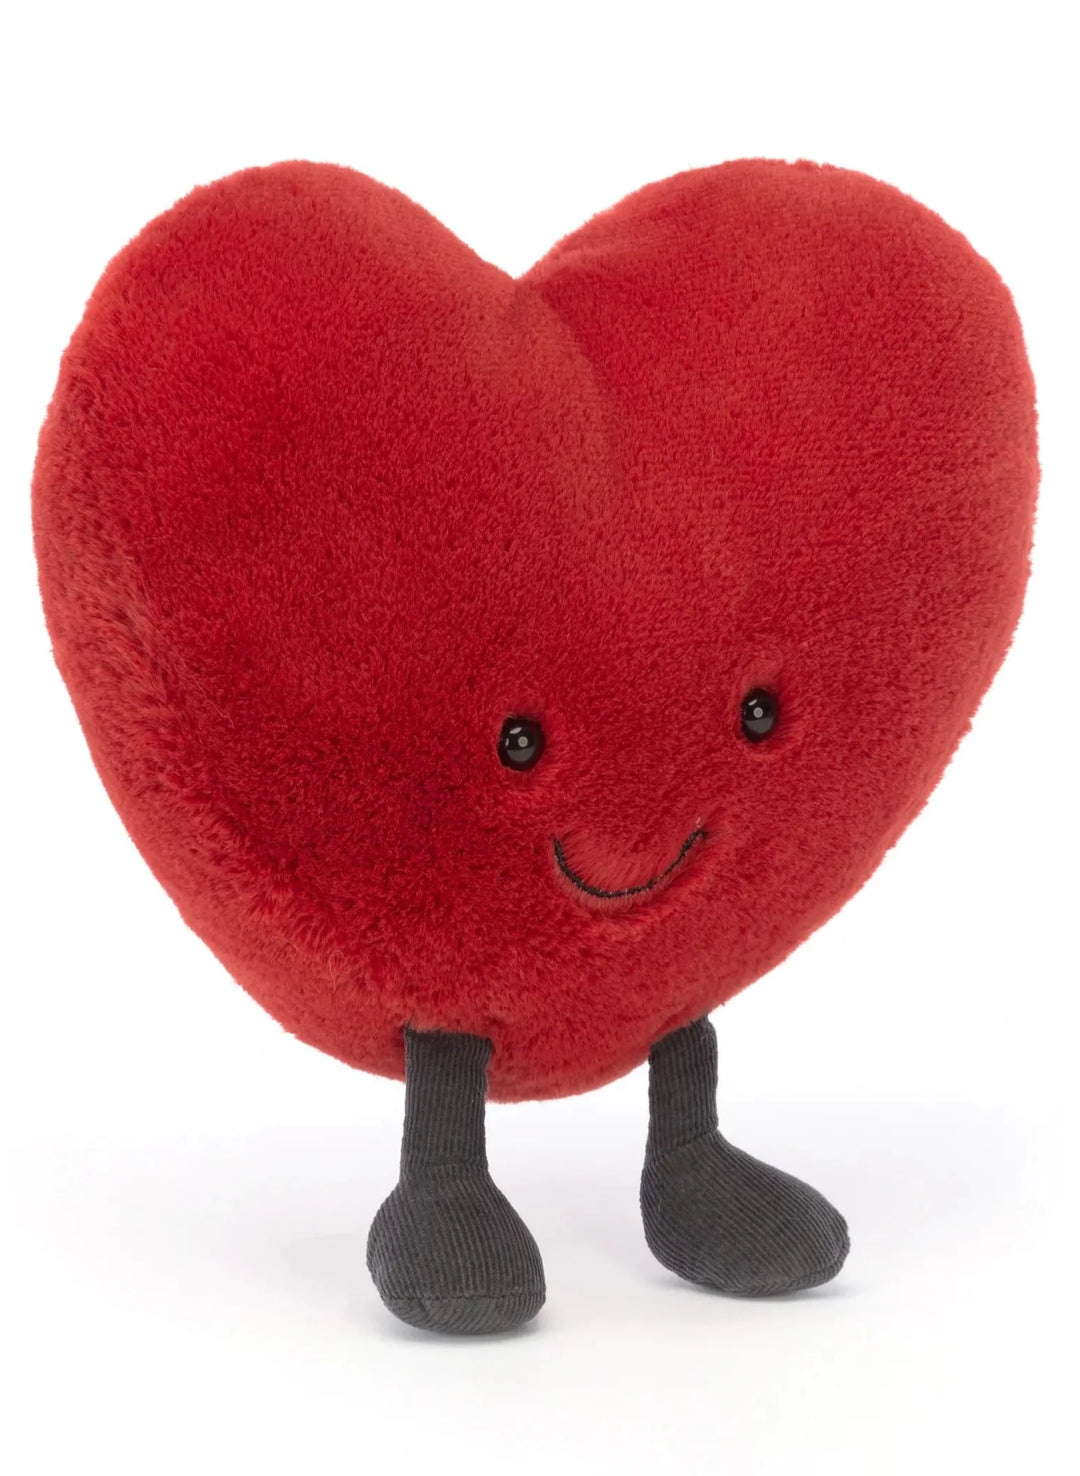 Heart stuffed animal